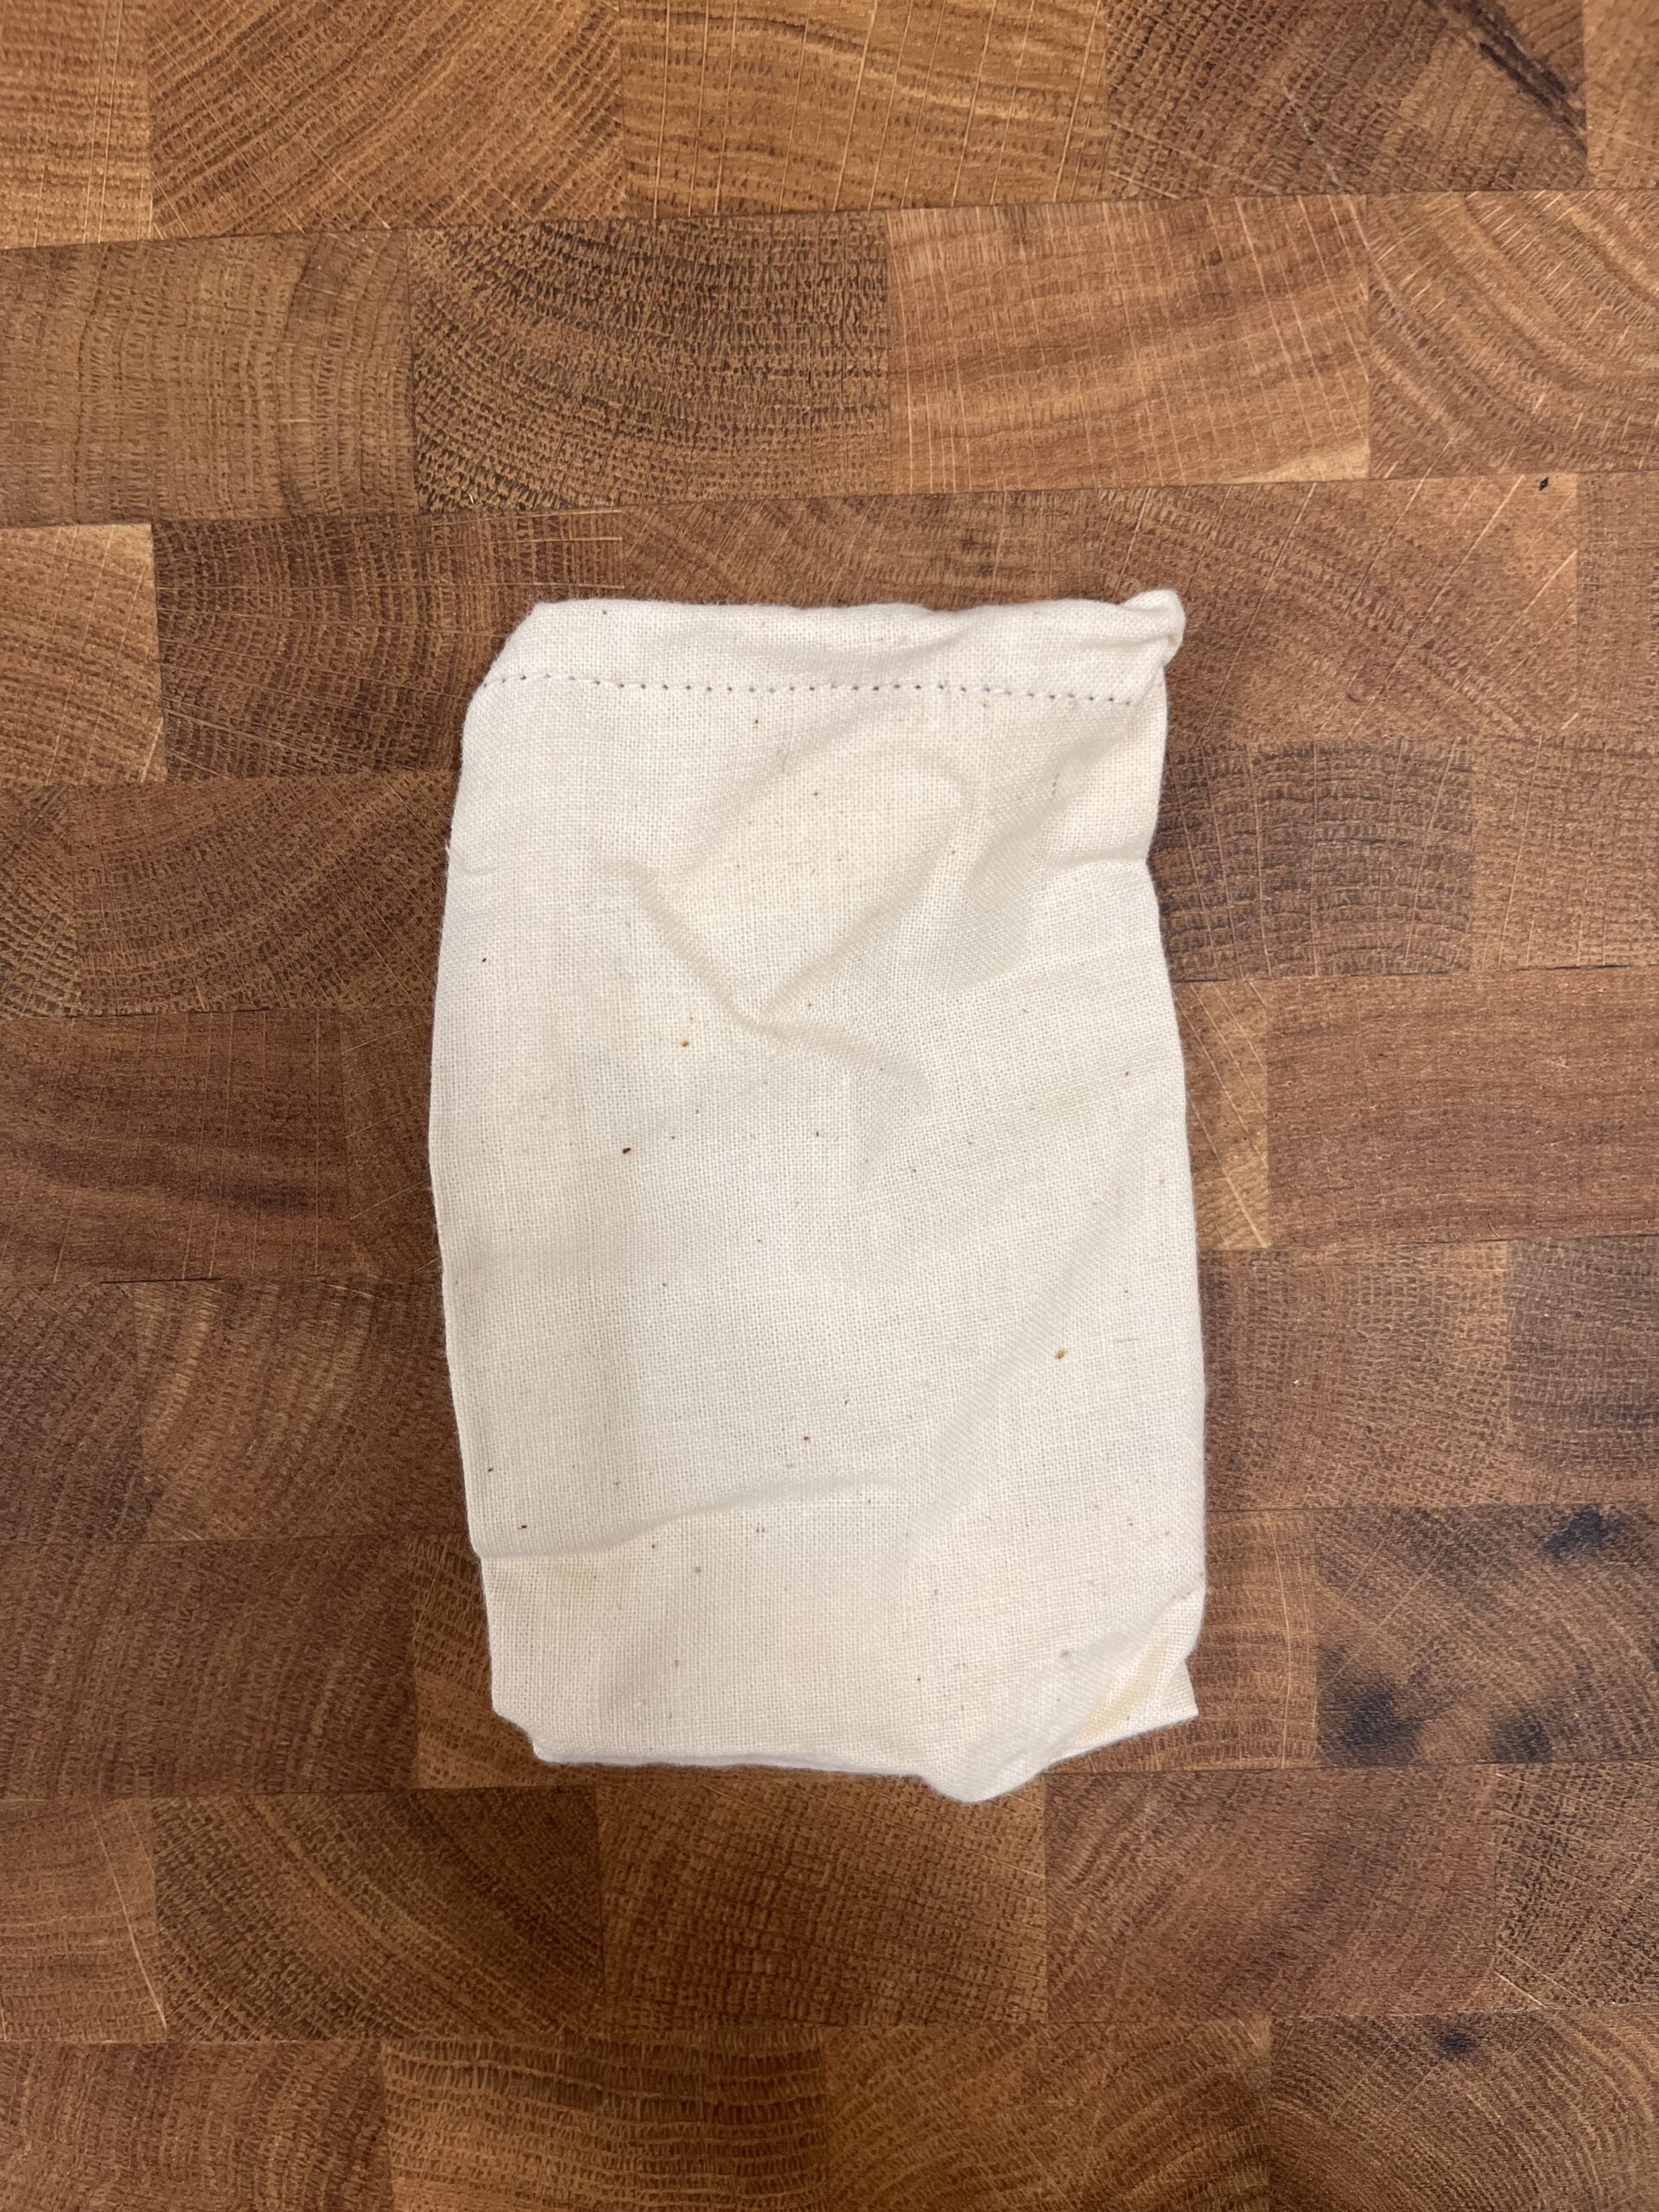 3x5" Cotton Bag